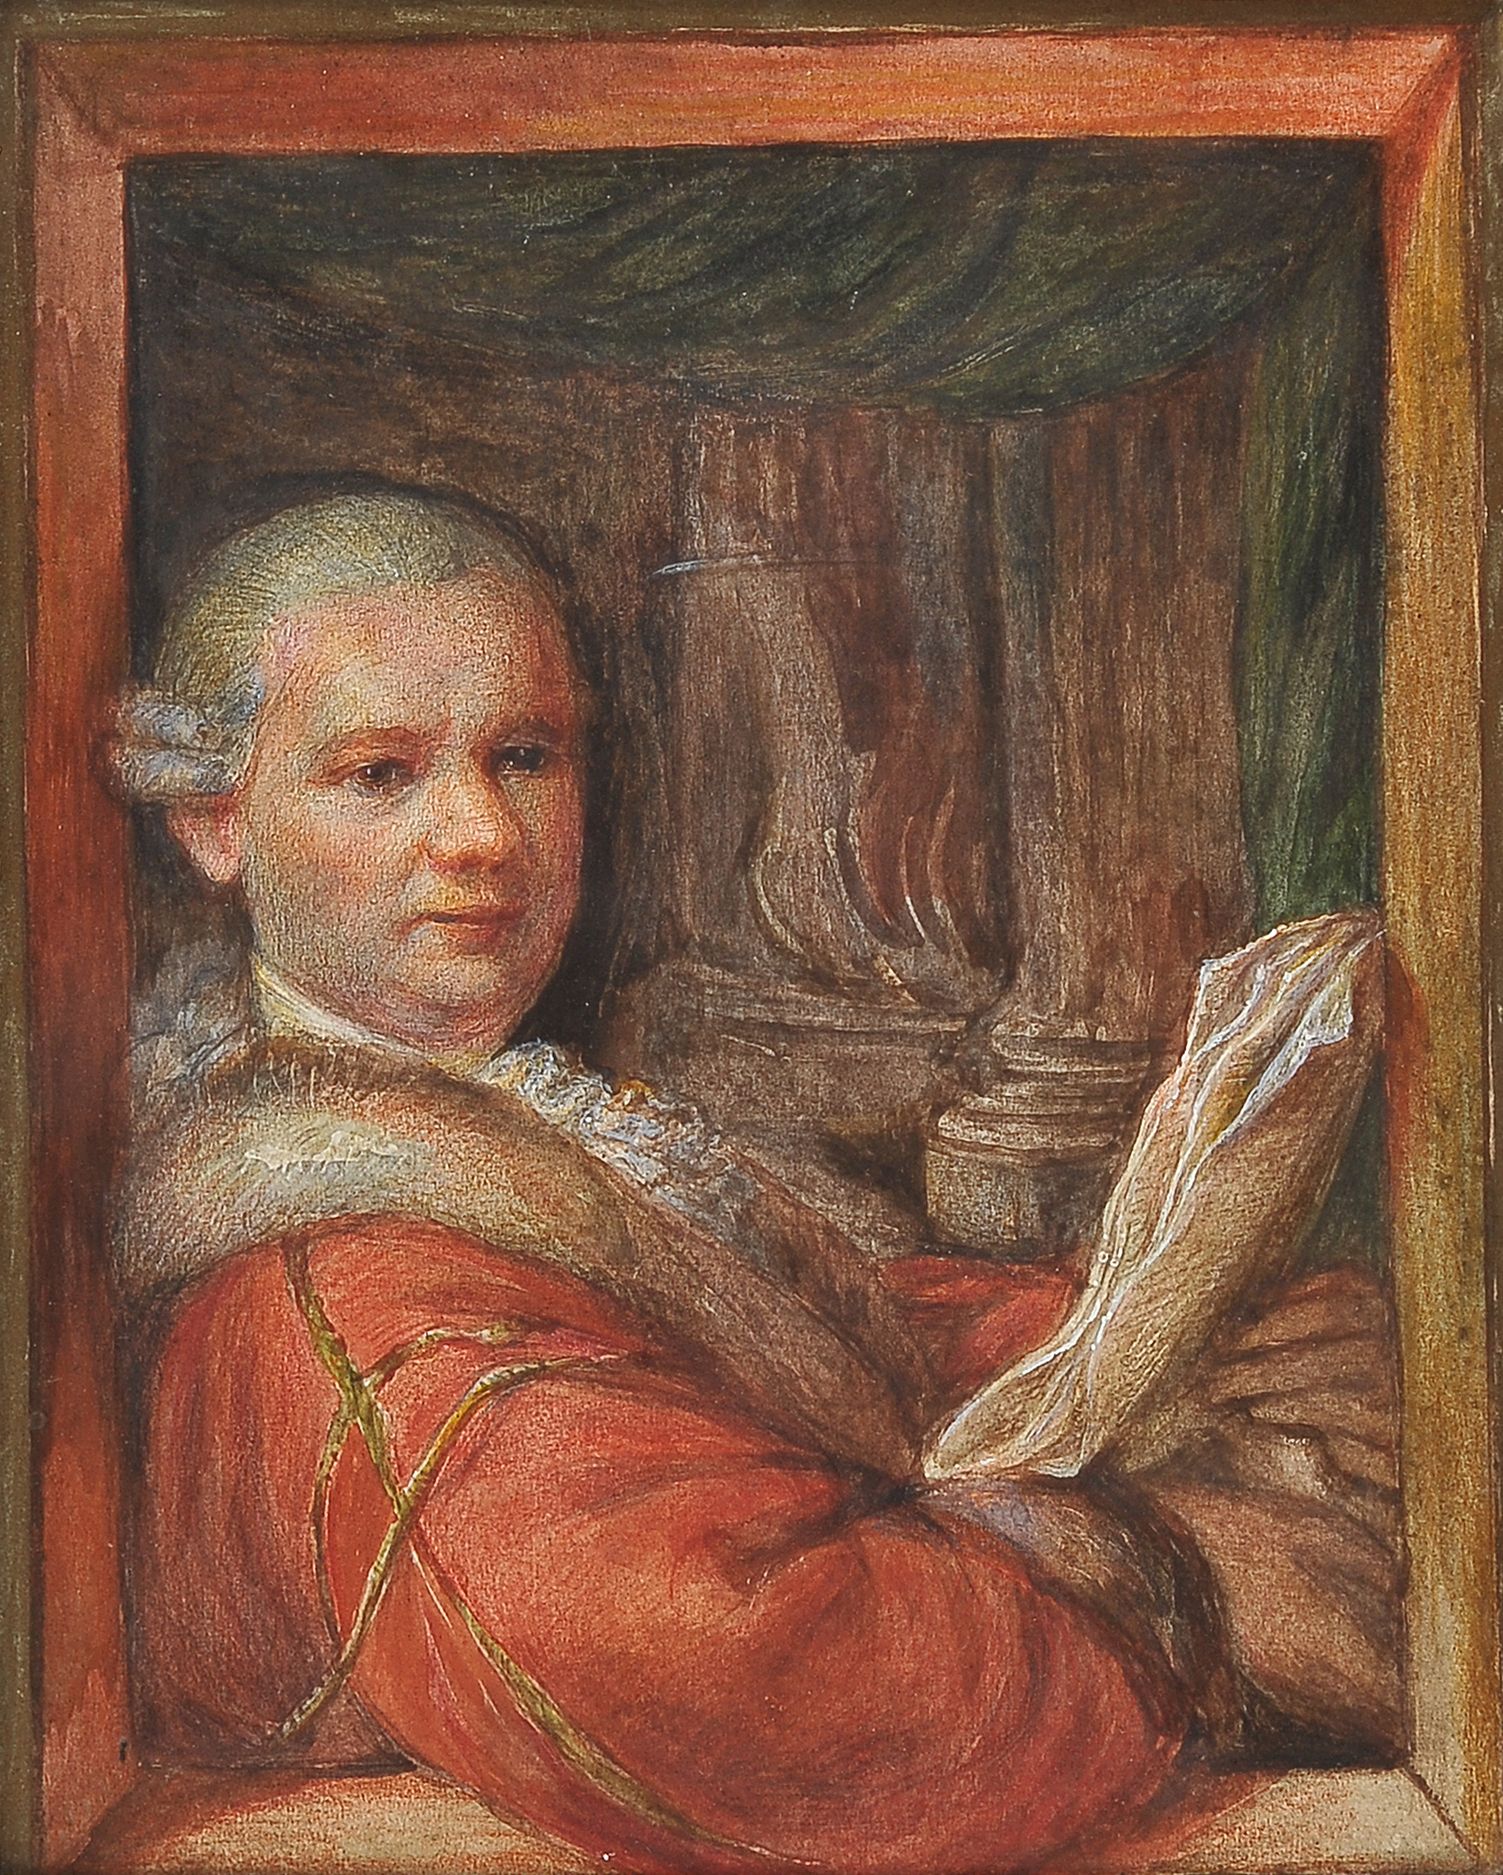 Null 一个贵族的画像


弗雷赫尔-冯-温布伦纳


比德梅尔，约1830/40年


纸上水粉画


21,3 x 17,3 cm